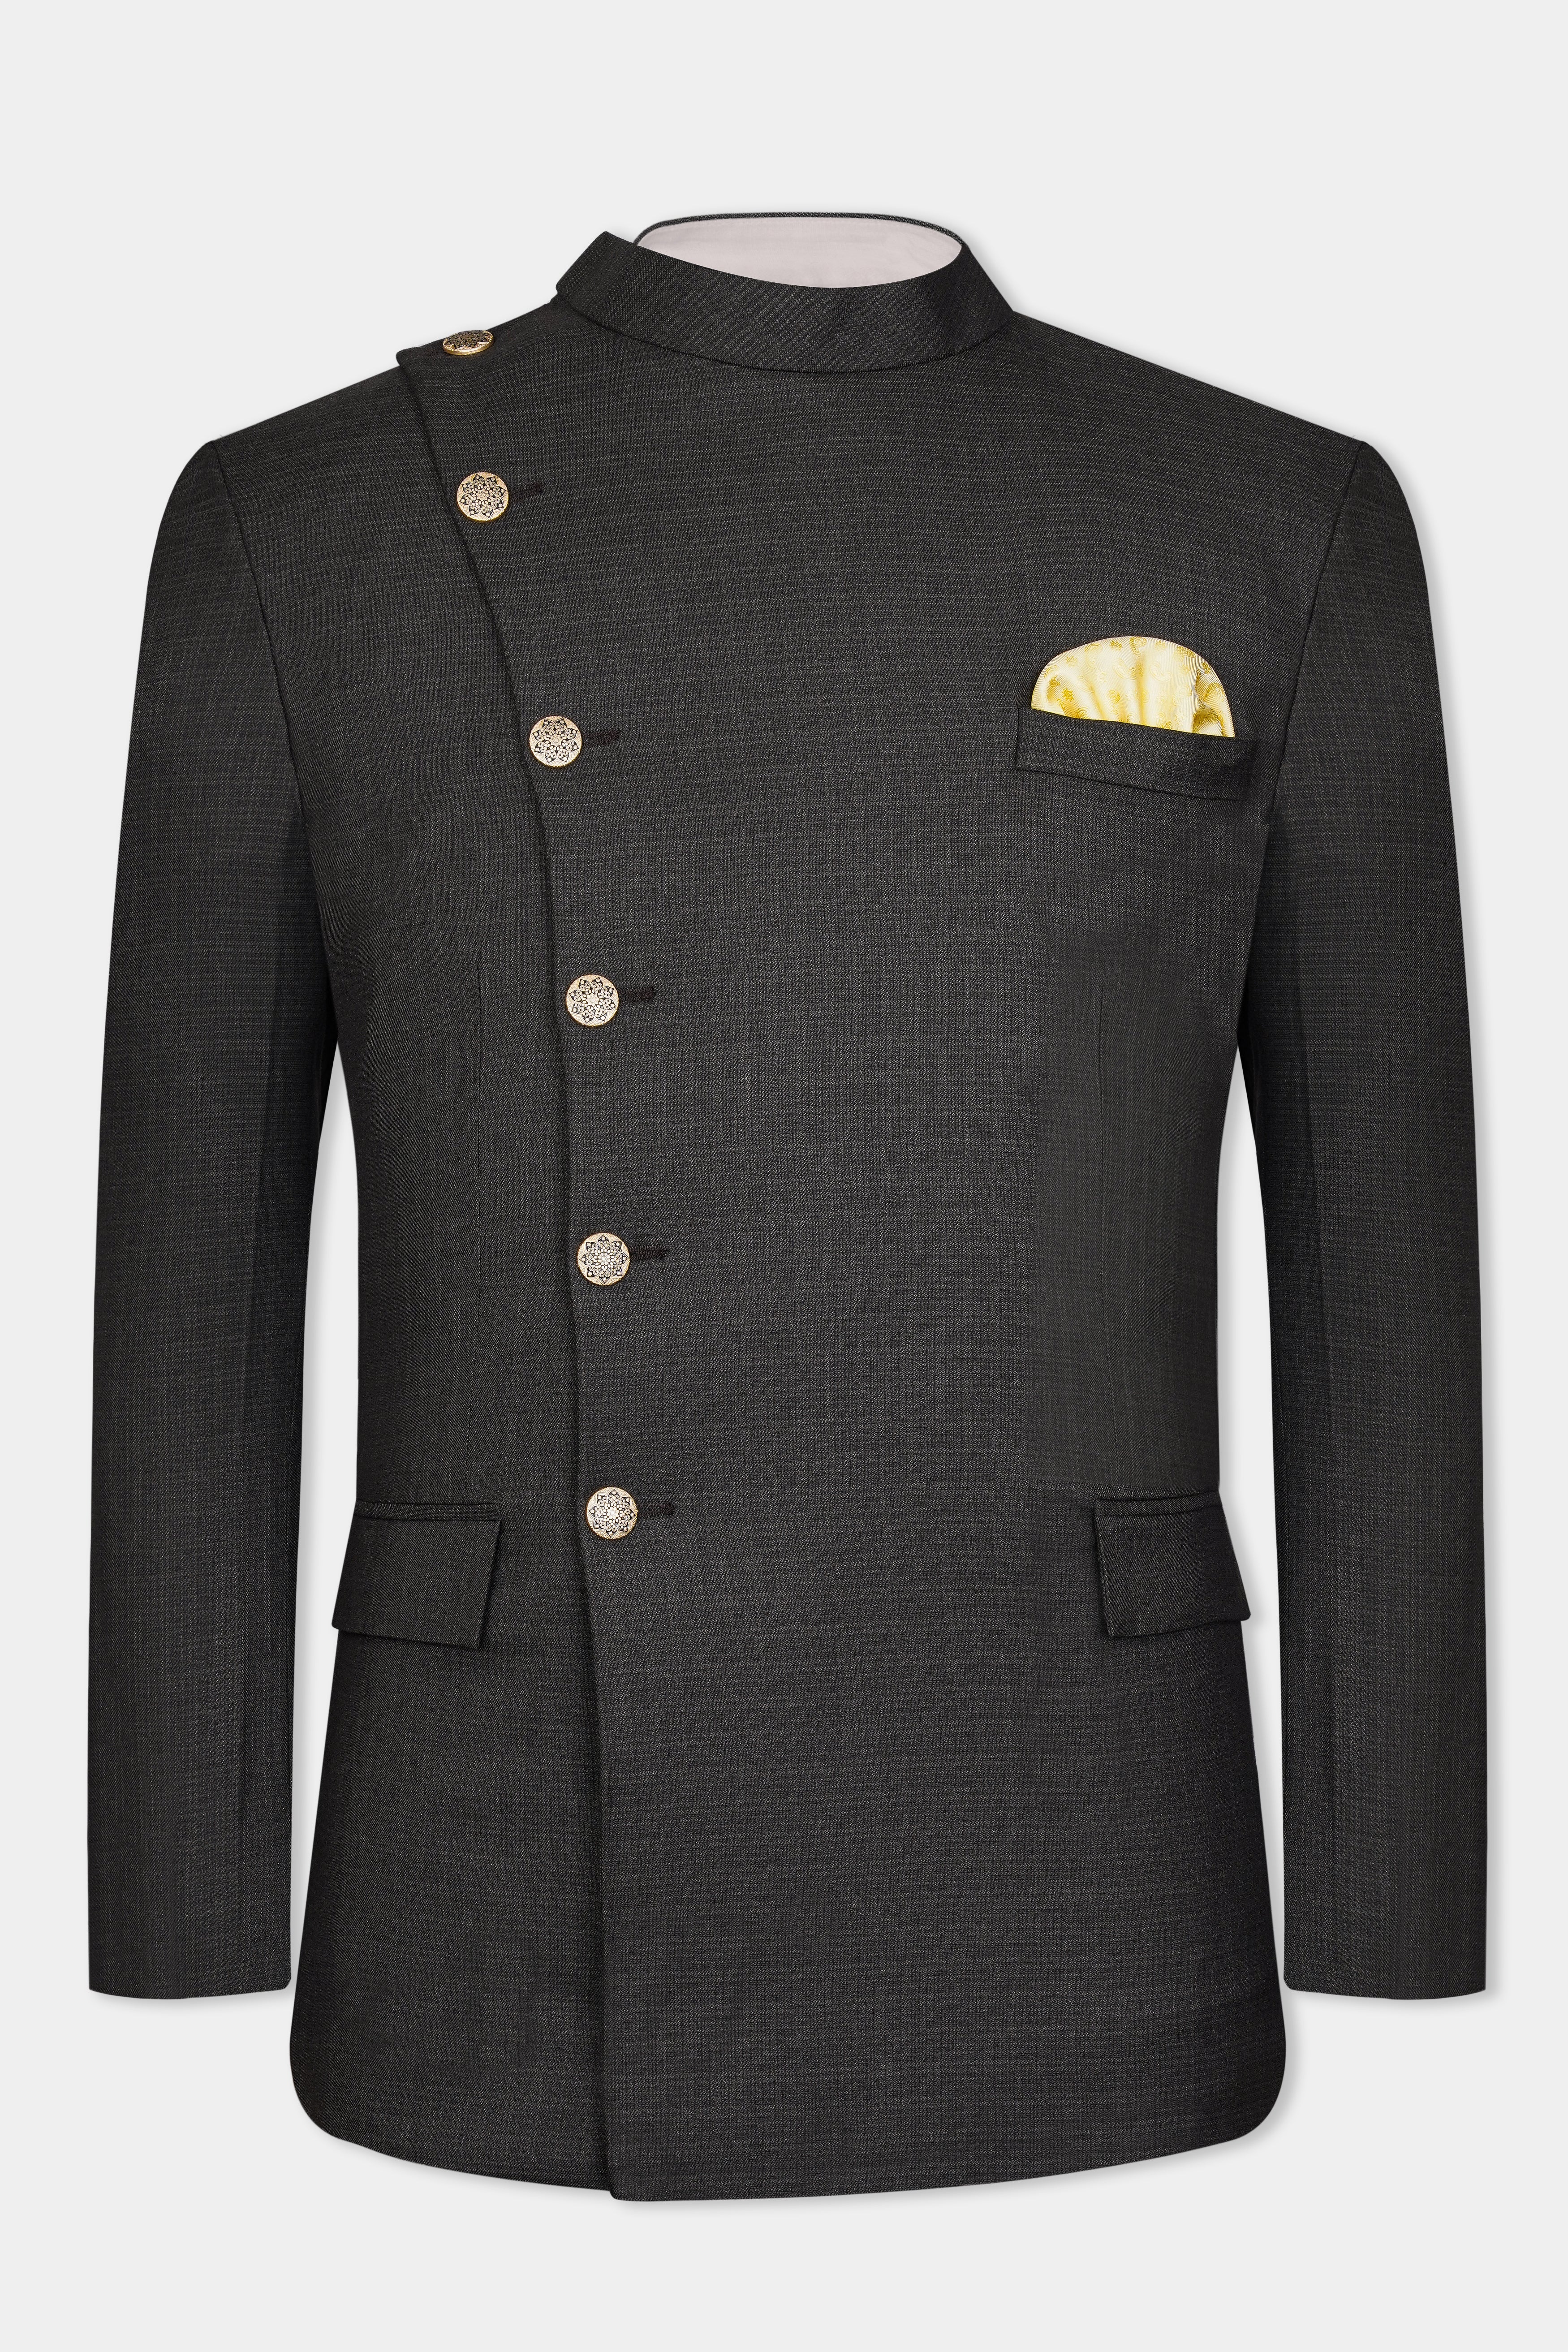 Zeus Black Subtle Checkered Wool Rich Cross Buttoned Bandhgala Blazer